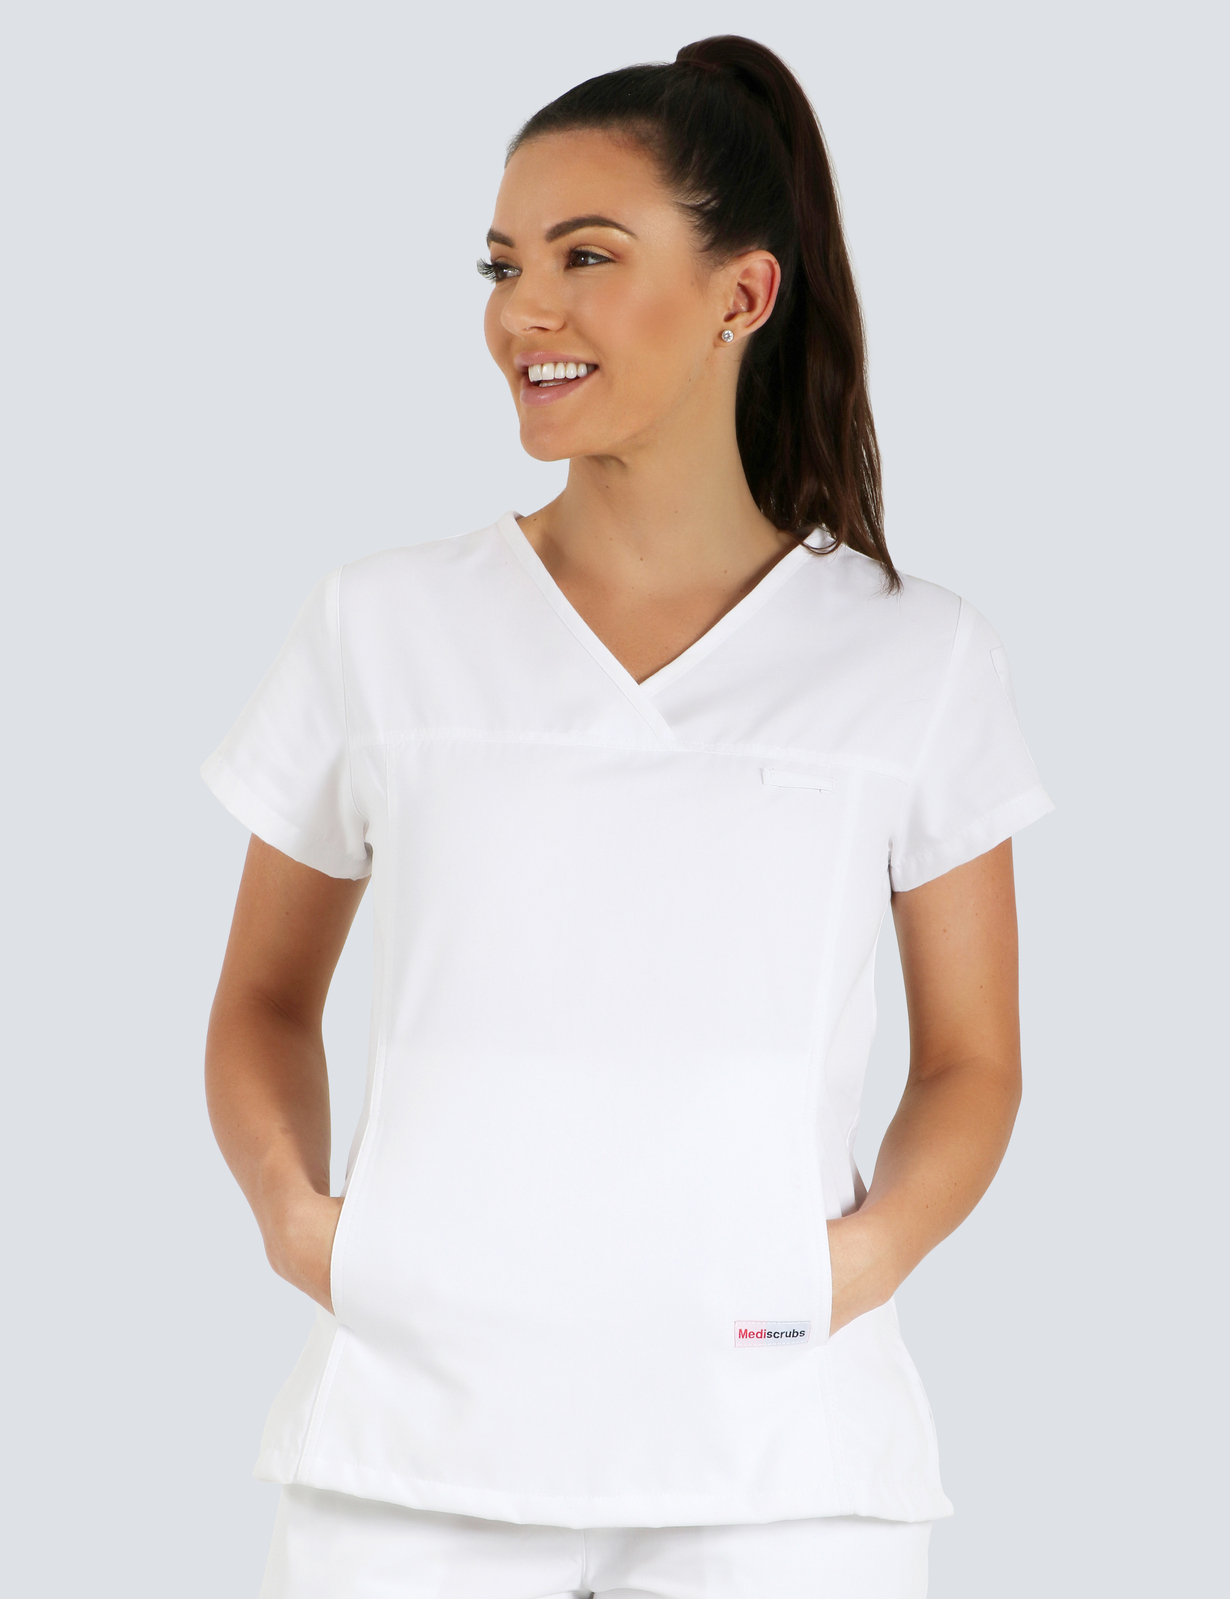 Queensland Children's Hospital Emergency Department Registrar Uniform Top Bundle  (Women's Fit Top in White  incl Logos)